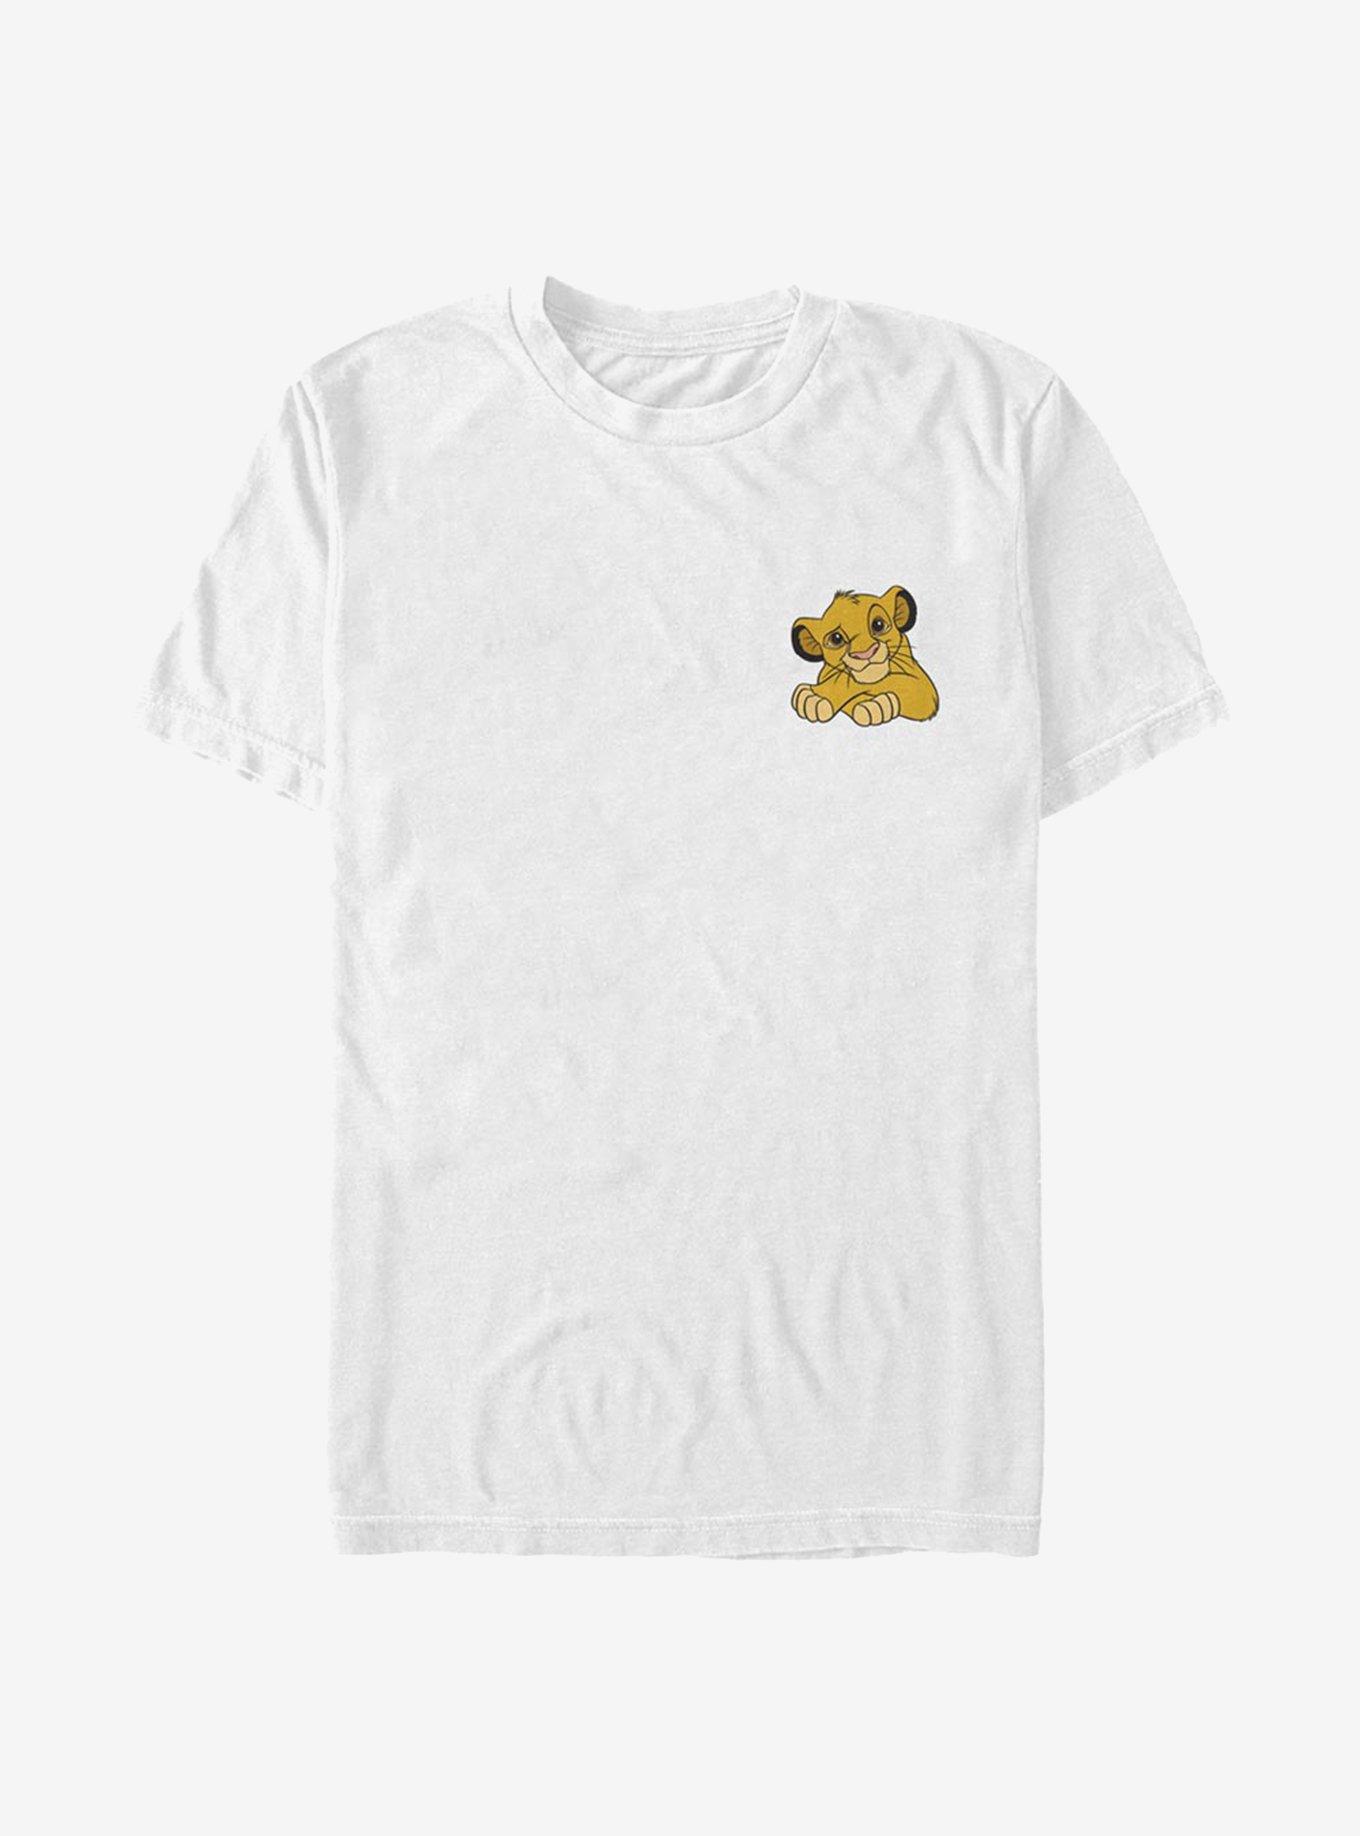 The Lion King Simba Children's Unisex White T-Shirt 